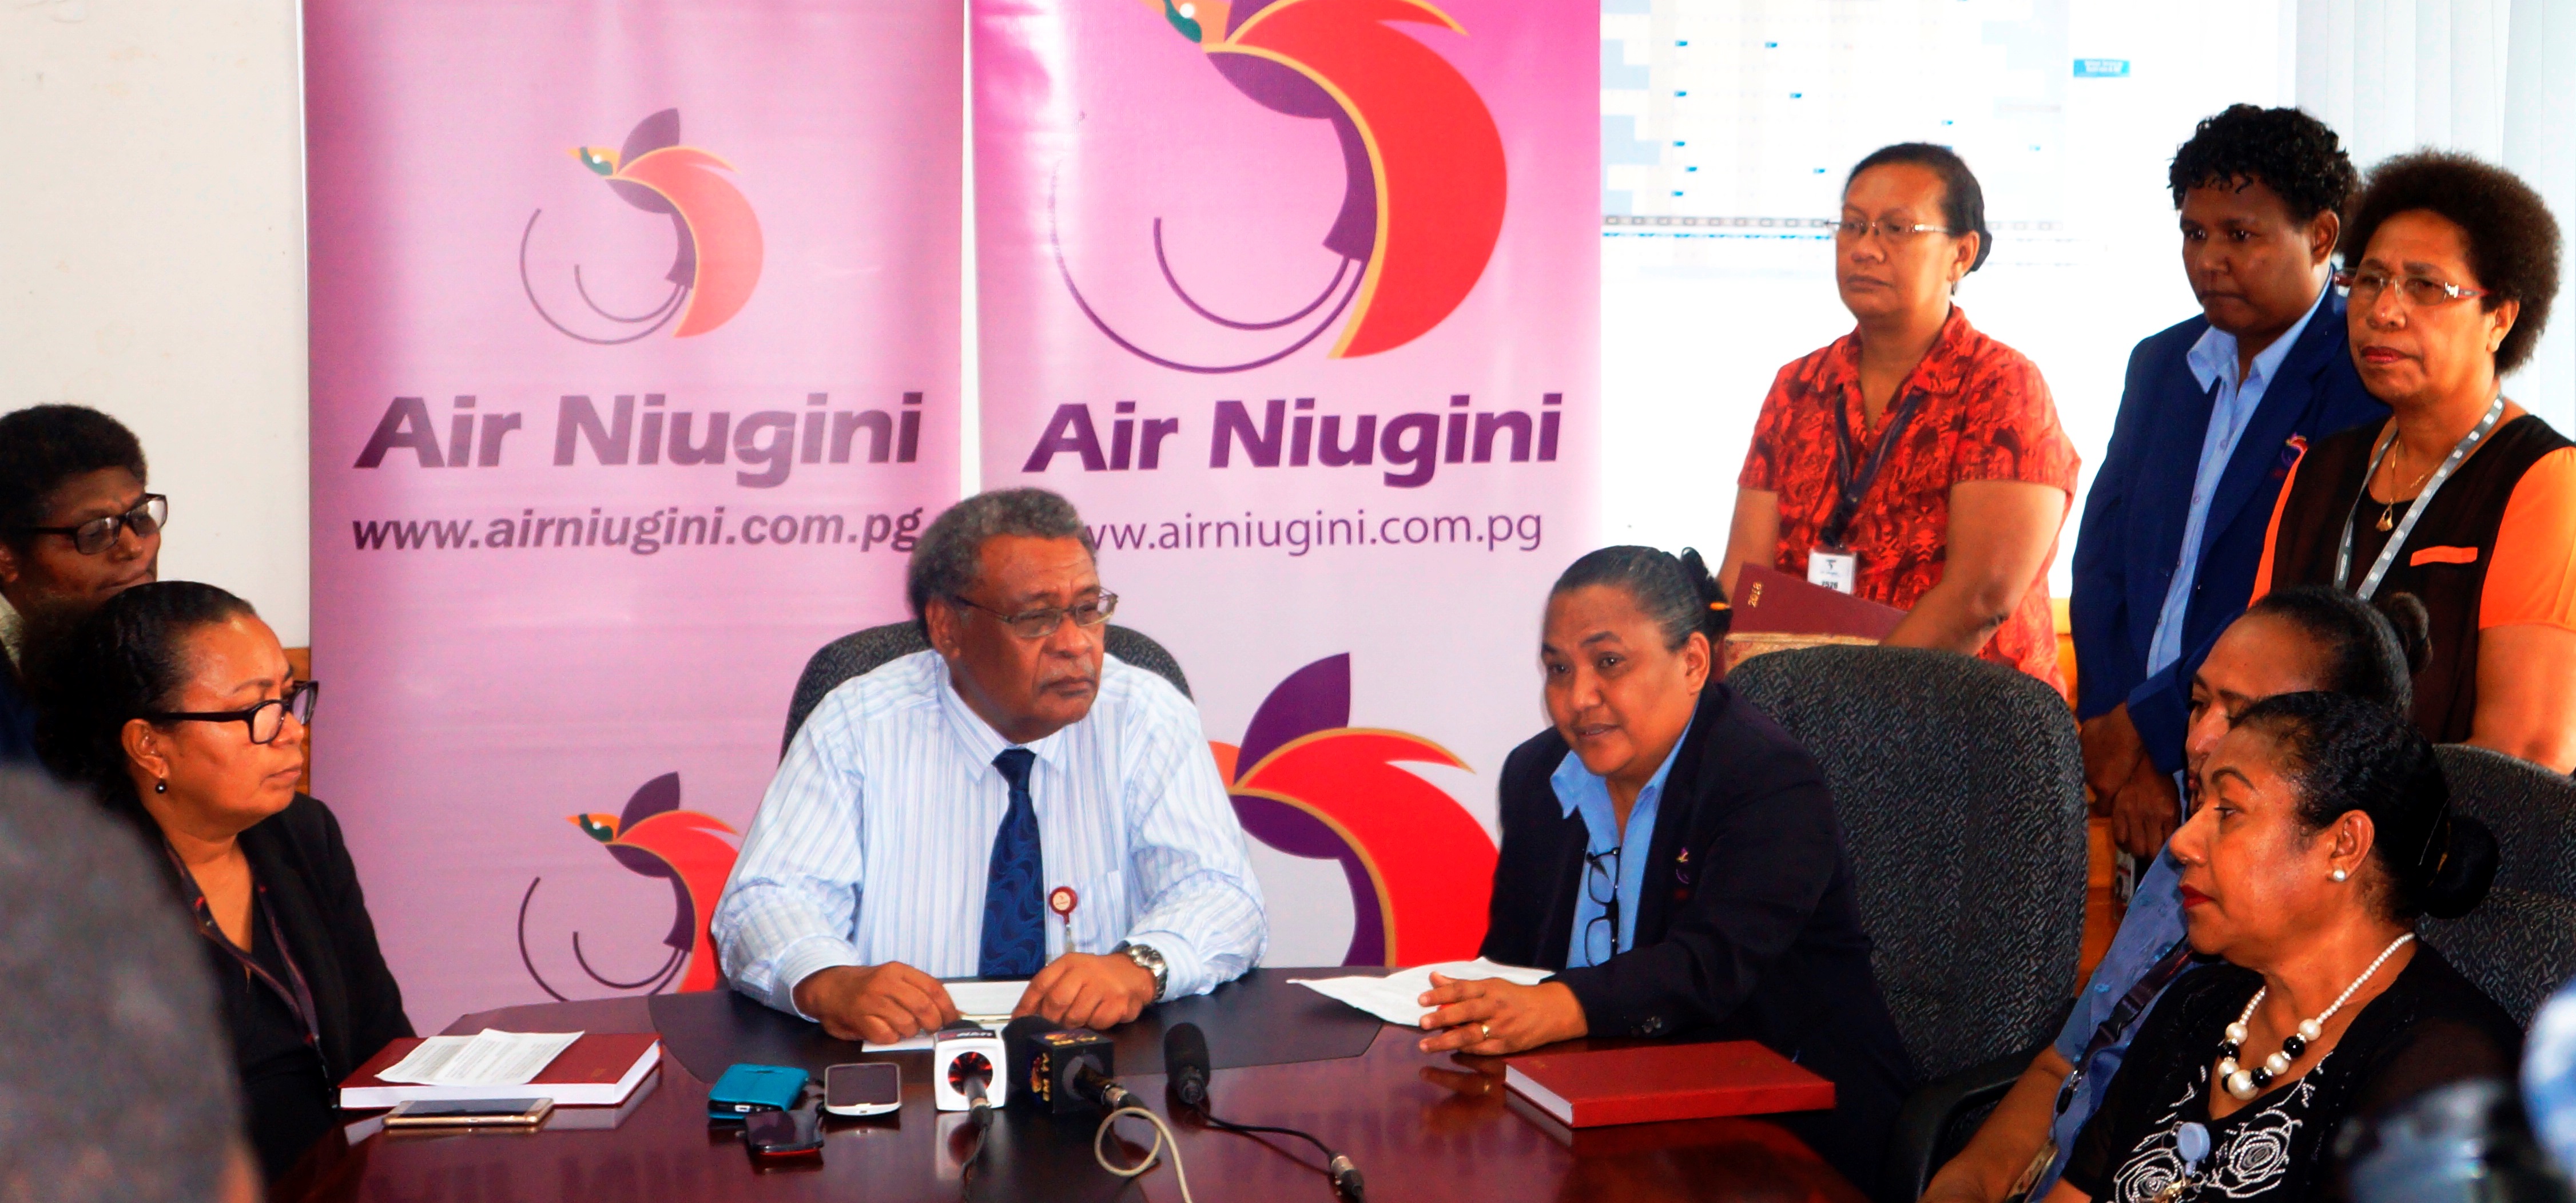 Air Niugini's emerging leaders focus on a new path